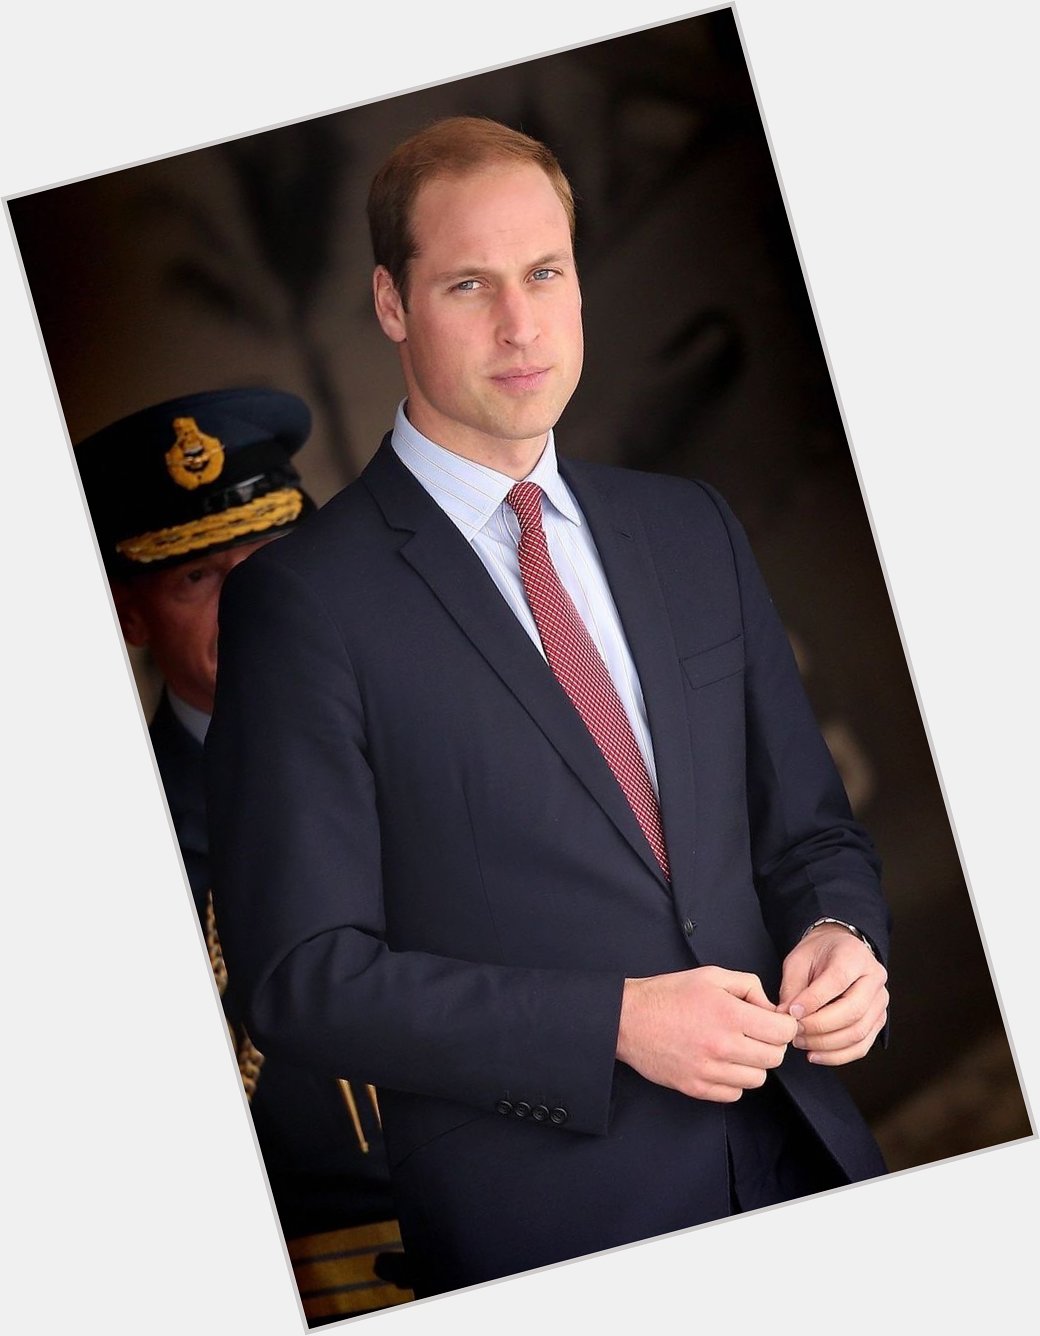 Wishing Prince William a very happy 41st birthday today  